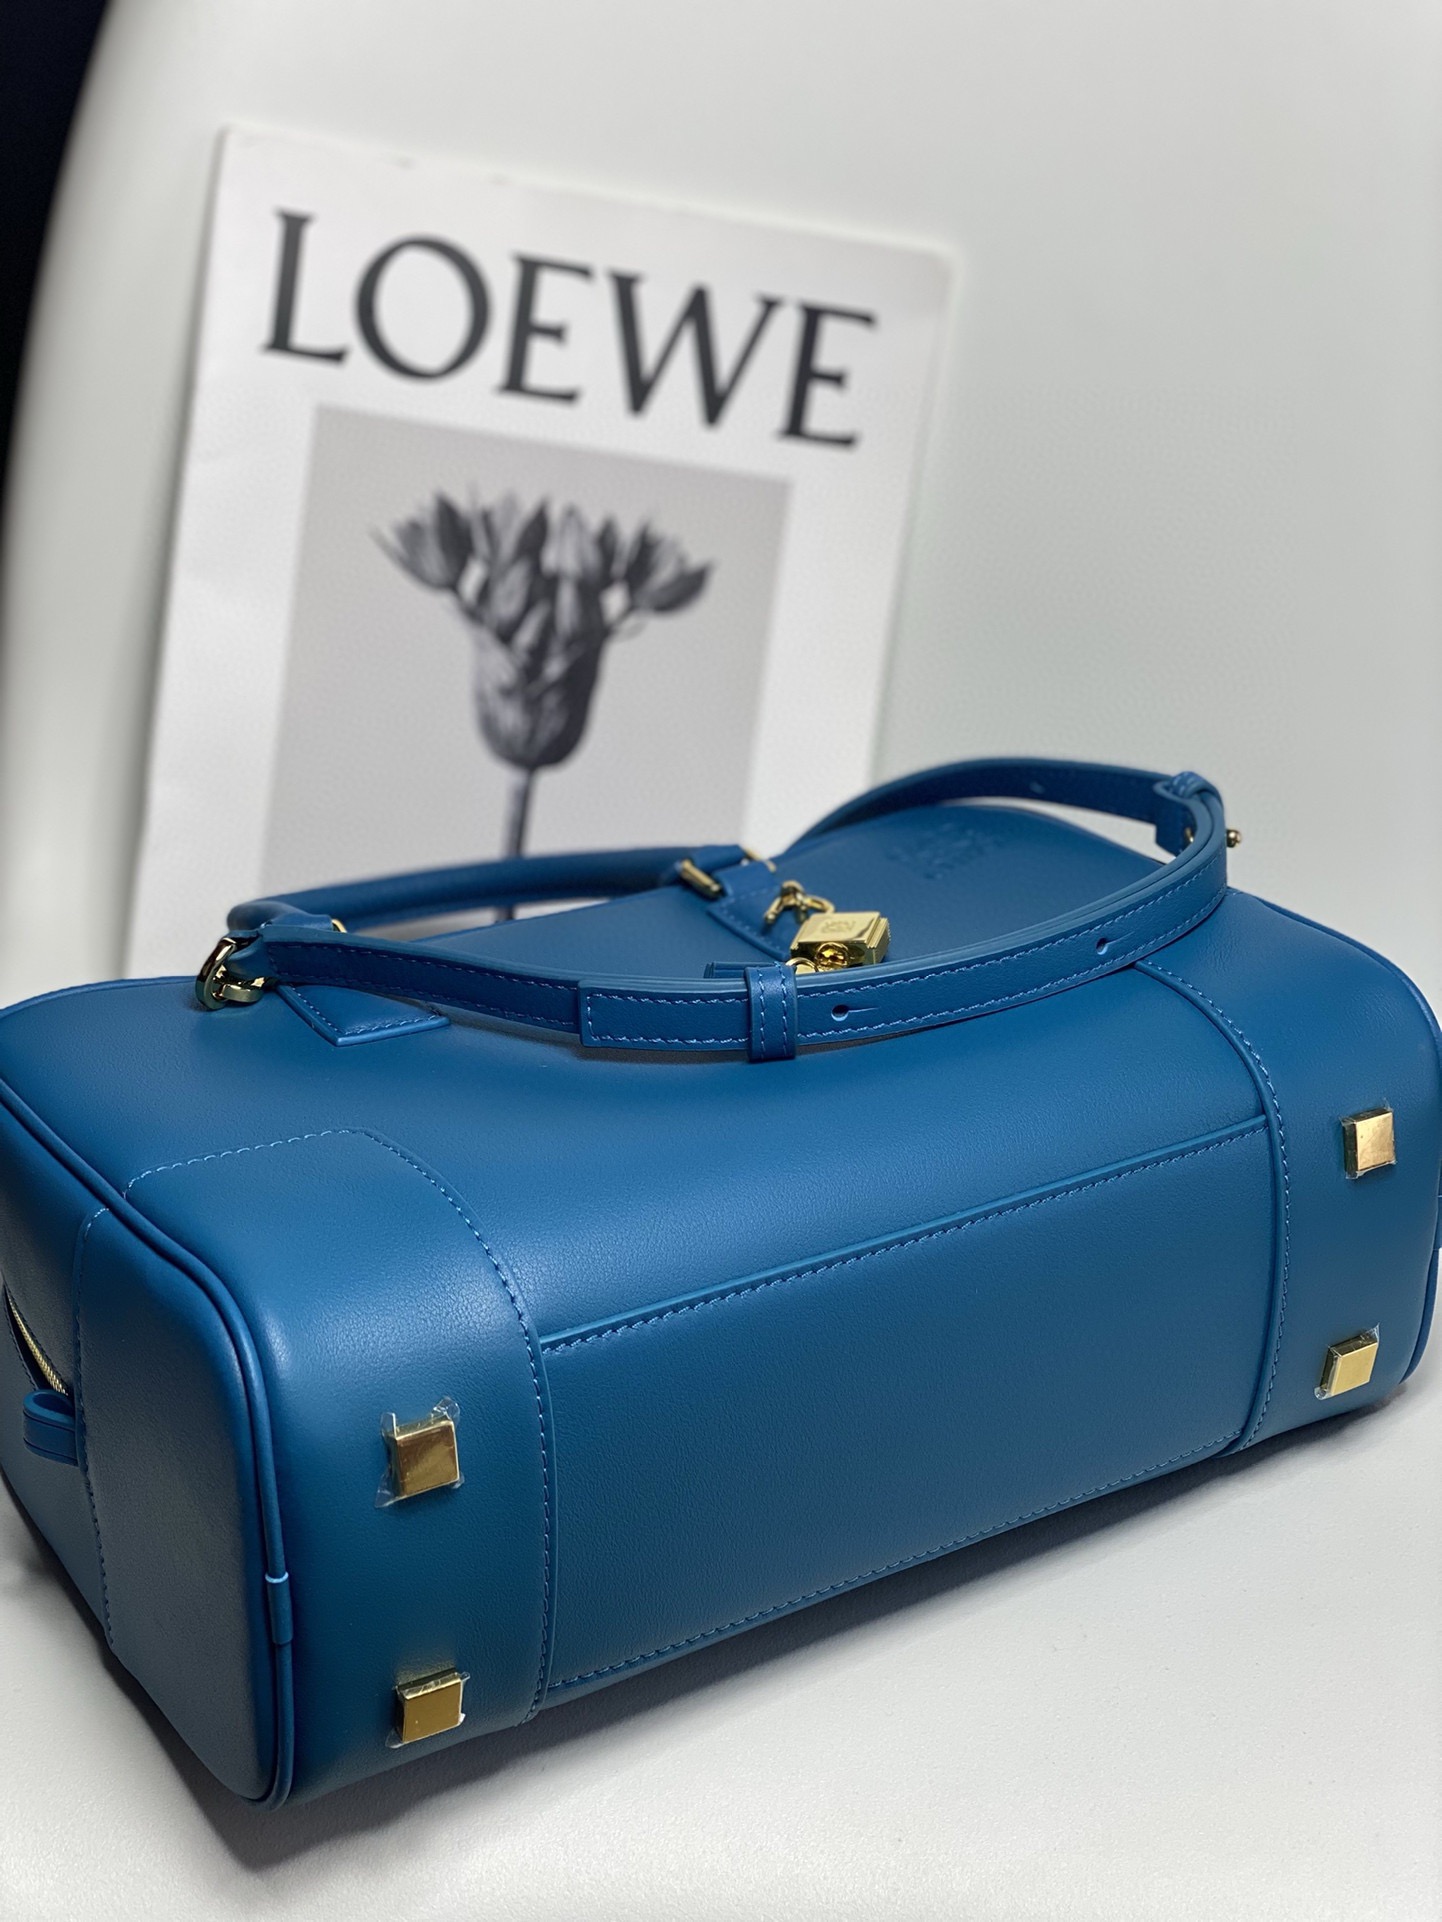 Loewe Original Leather tote 652388 blue